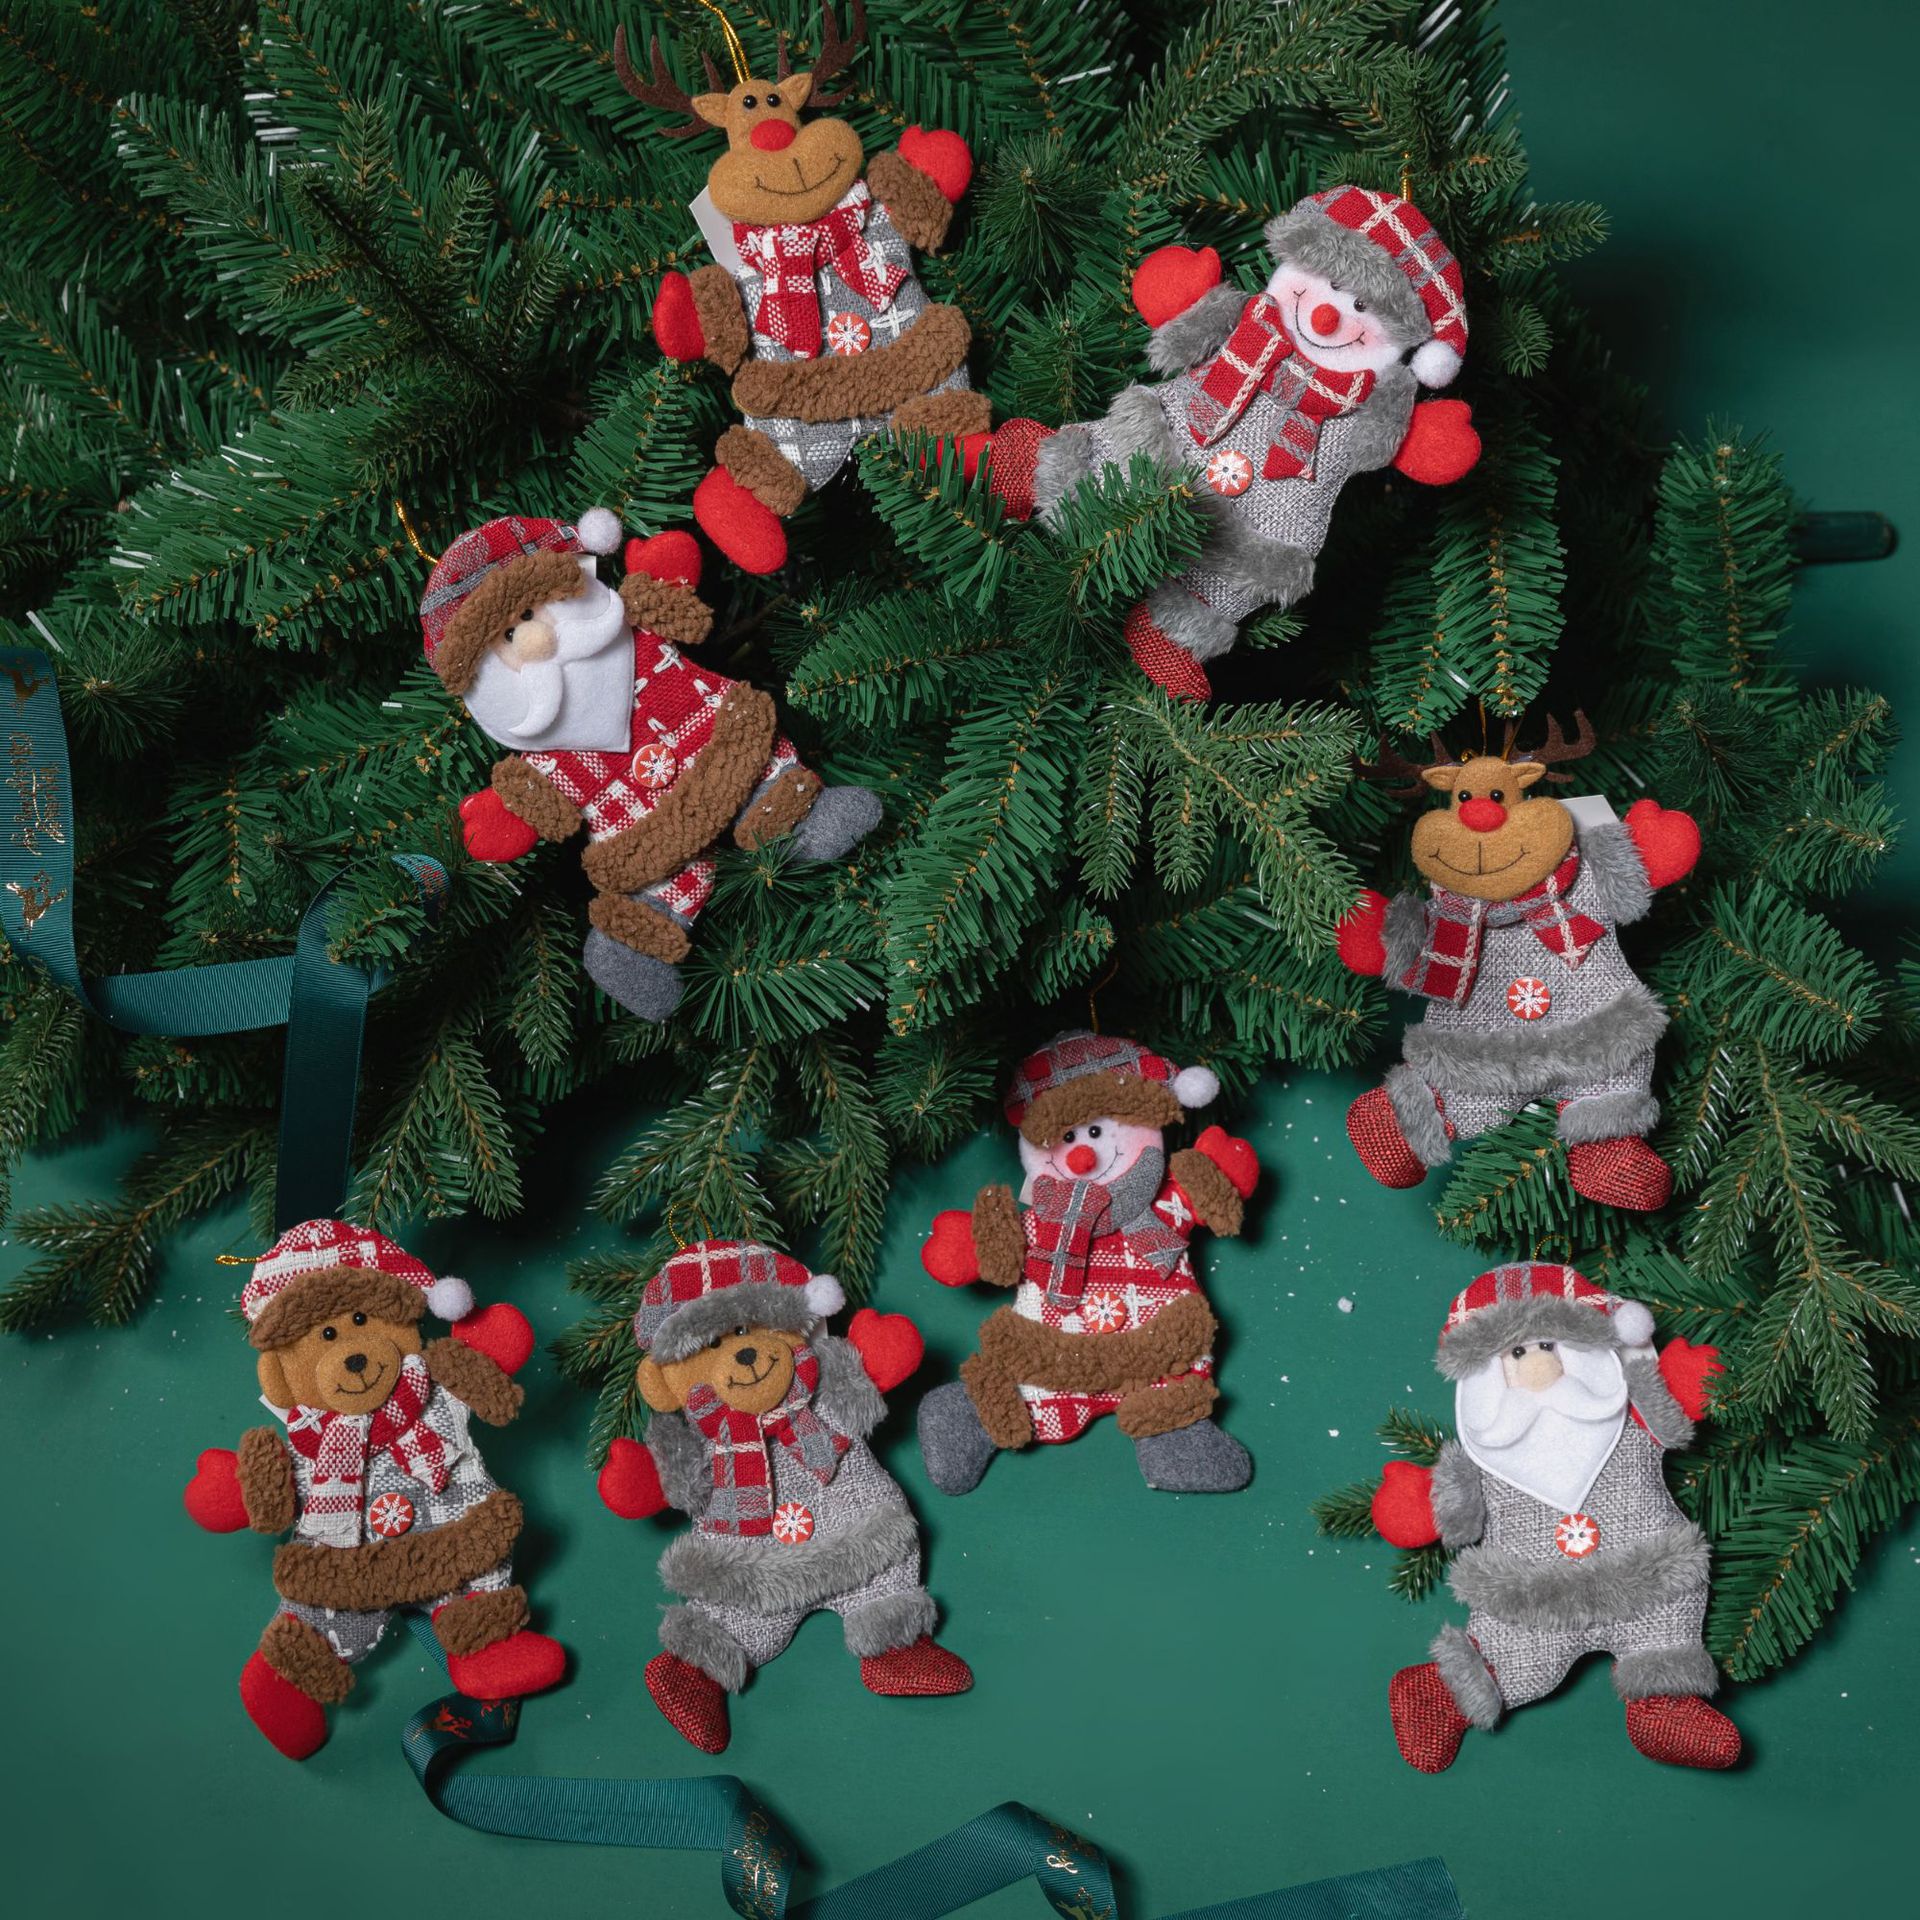 Dancing Christmas Soft Stuffed Dolls Santa Snowman Reindeer Bear Ornaments Plush Toy 